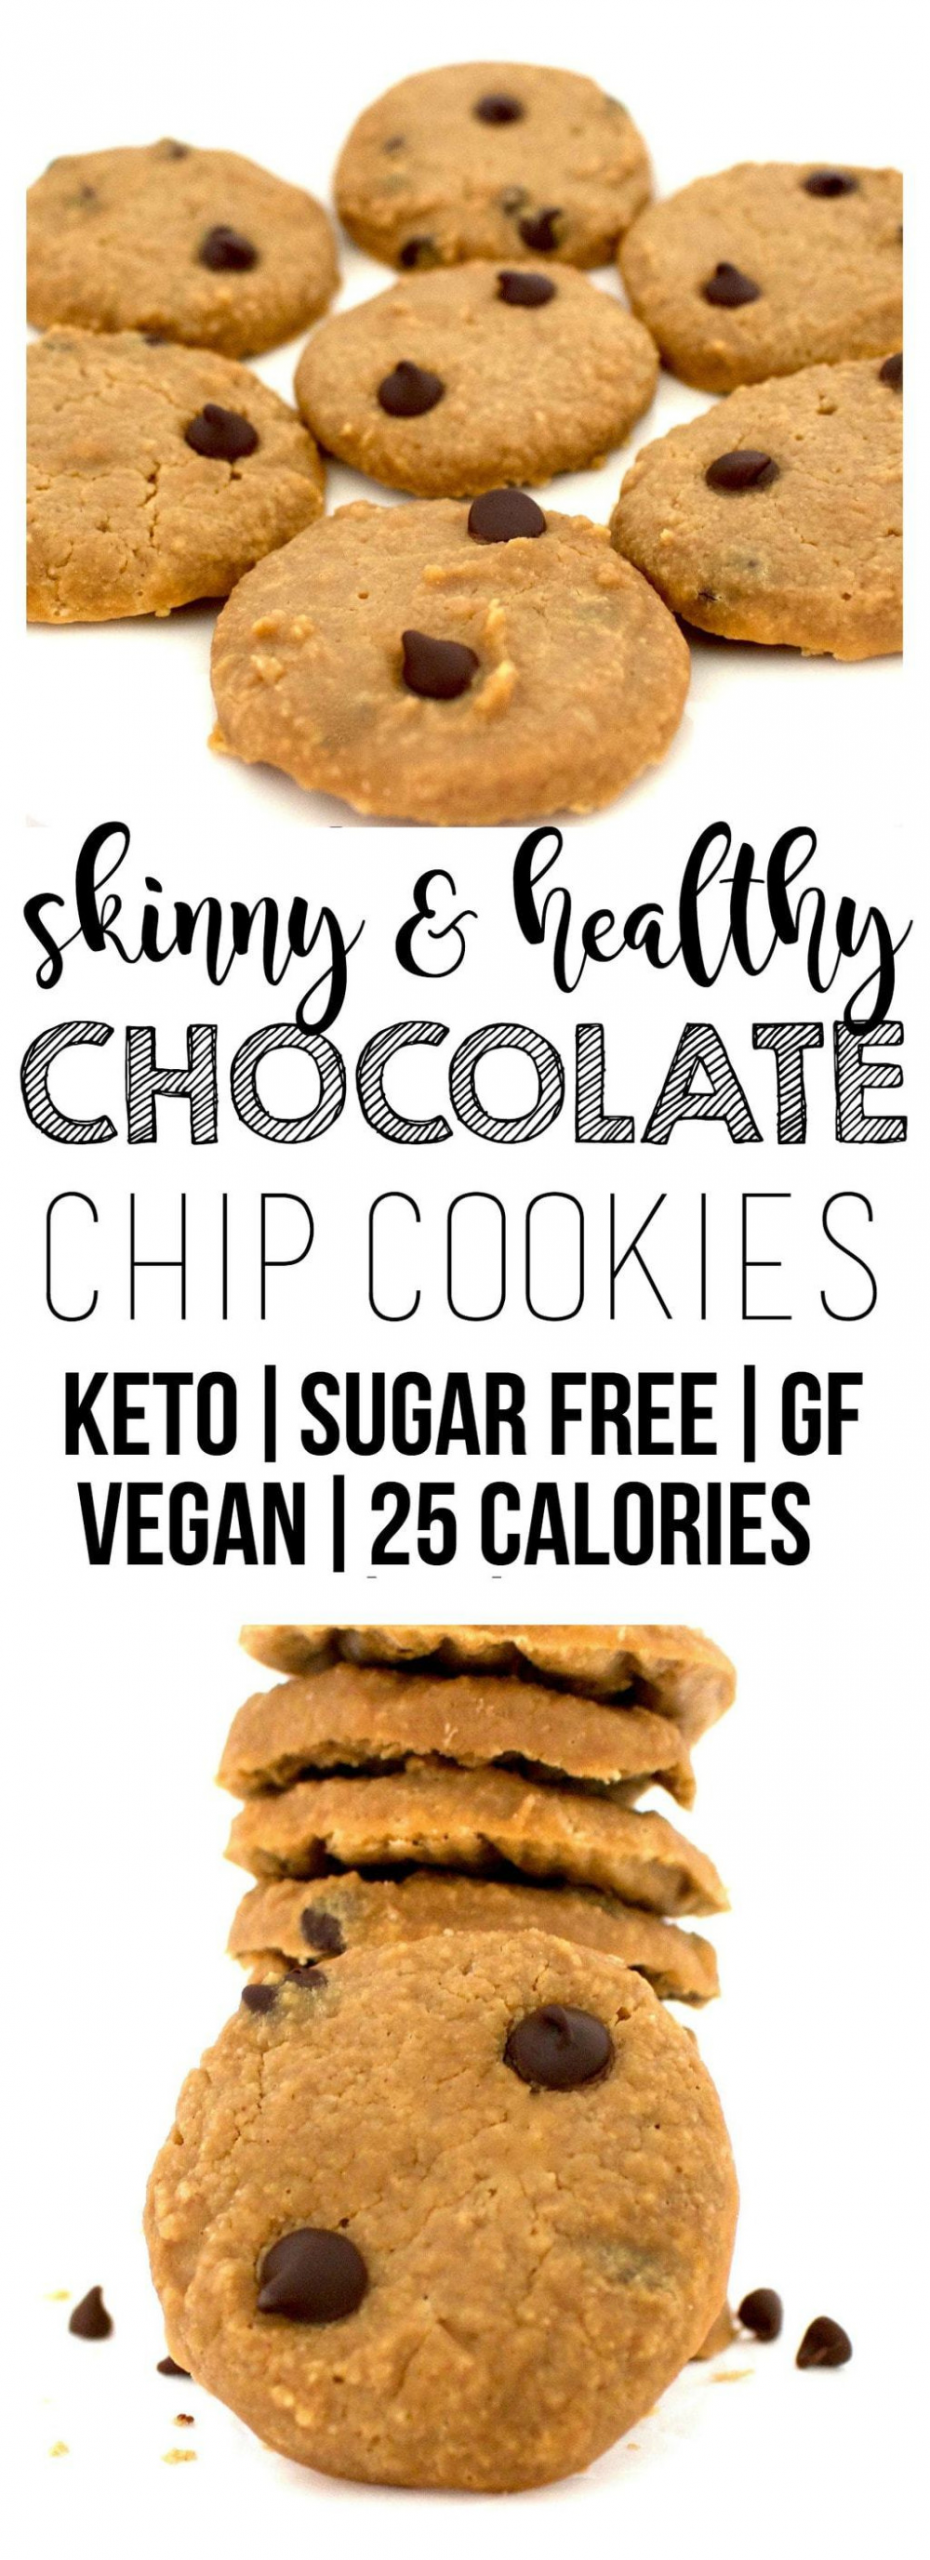 Healthy Cookies Recipe Low Calorie
 Skinny Chocolate Chip Cookies Recipe in 2020